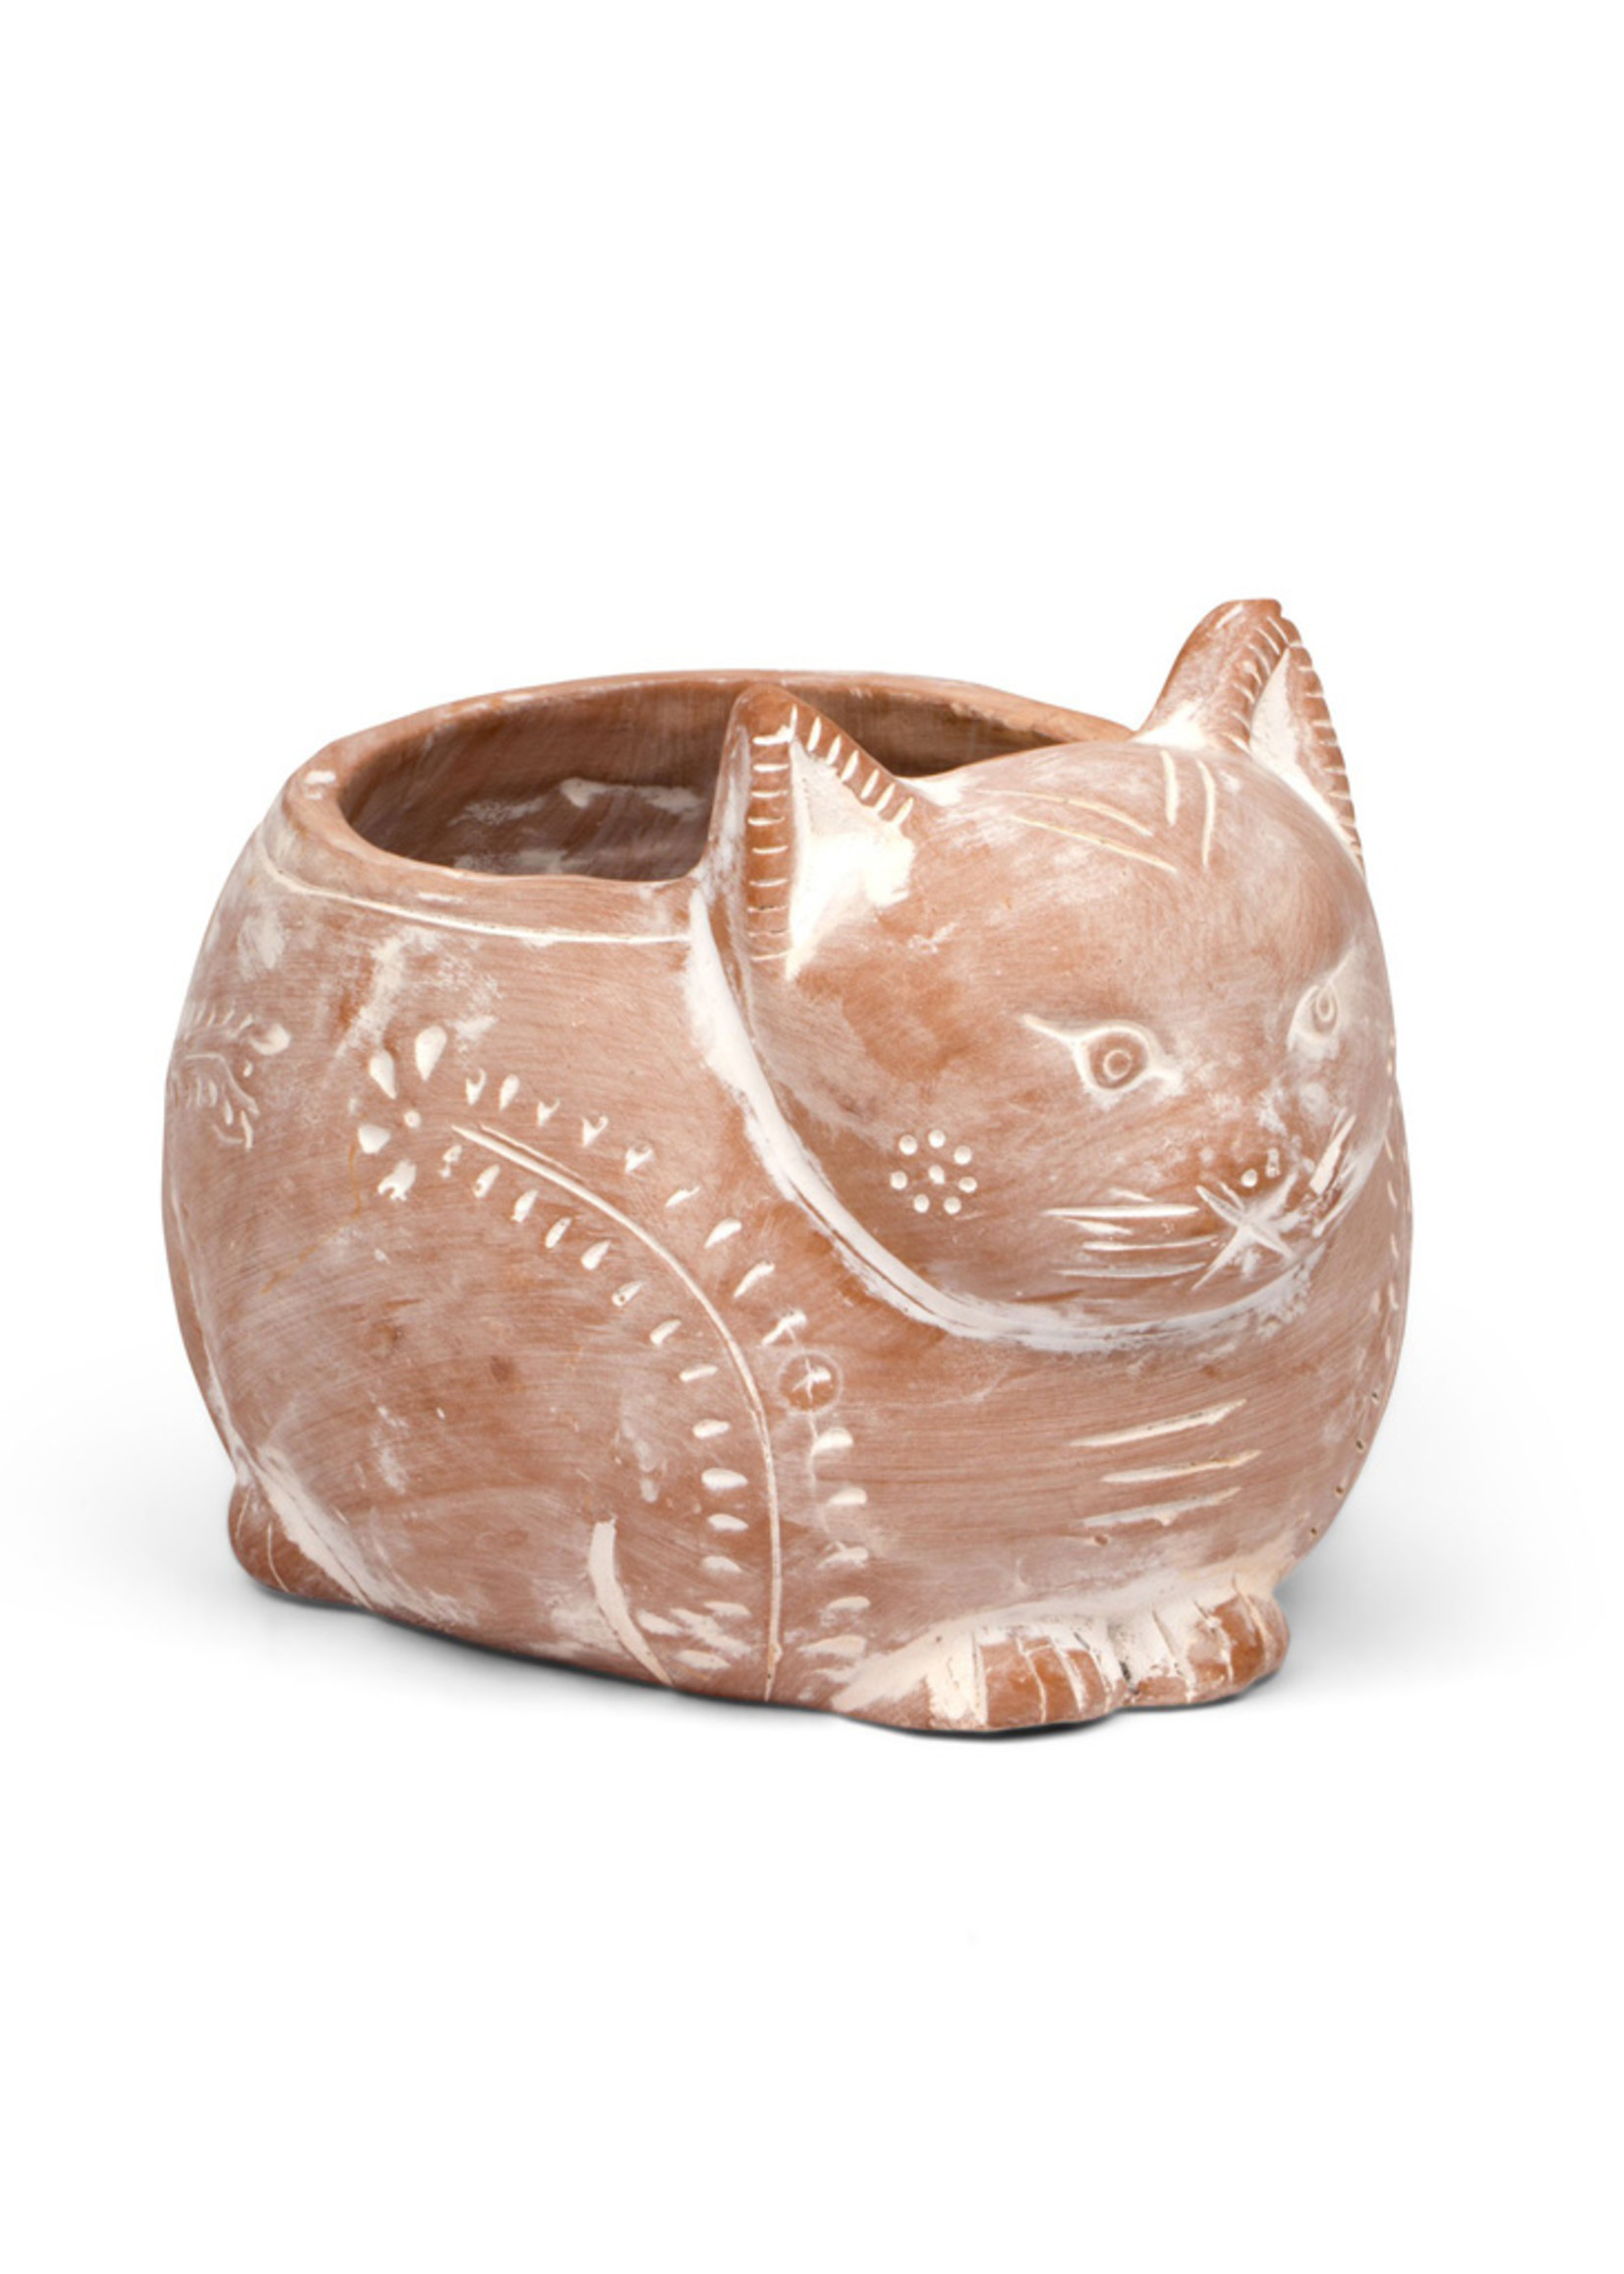 Ten Thousand Villages Ceramic Crouching Cat Planter